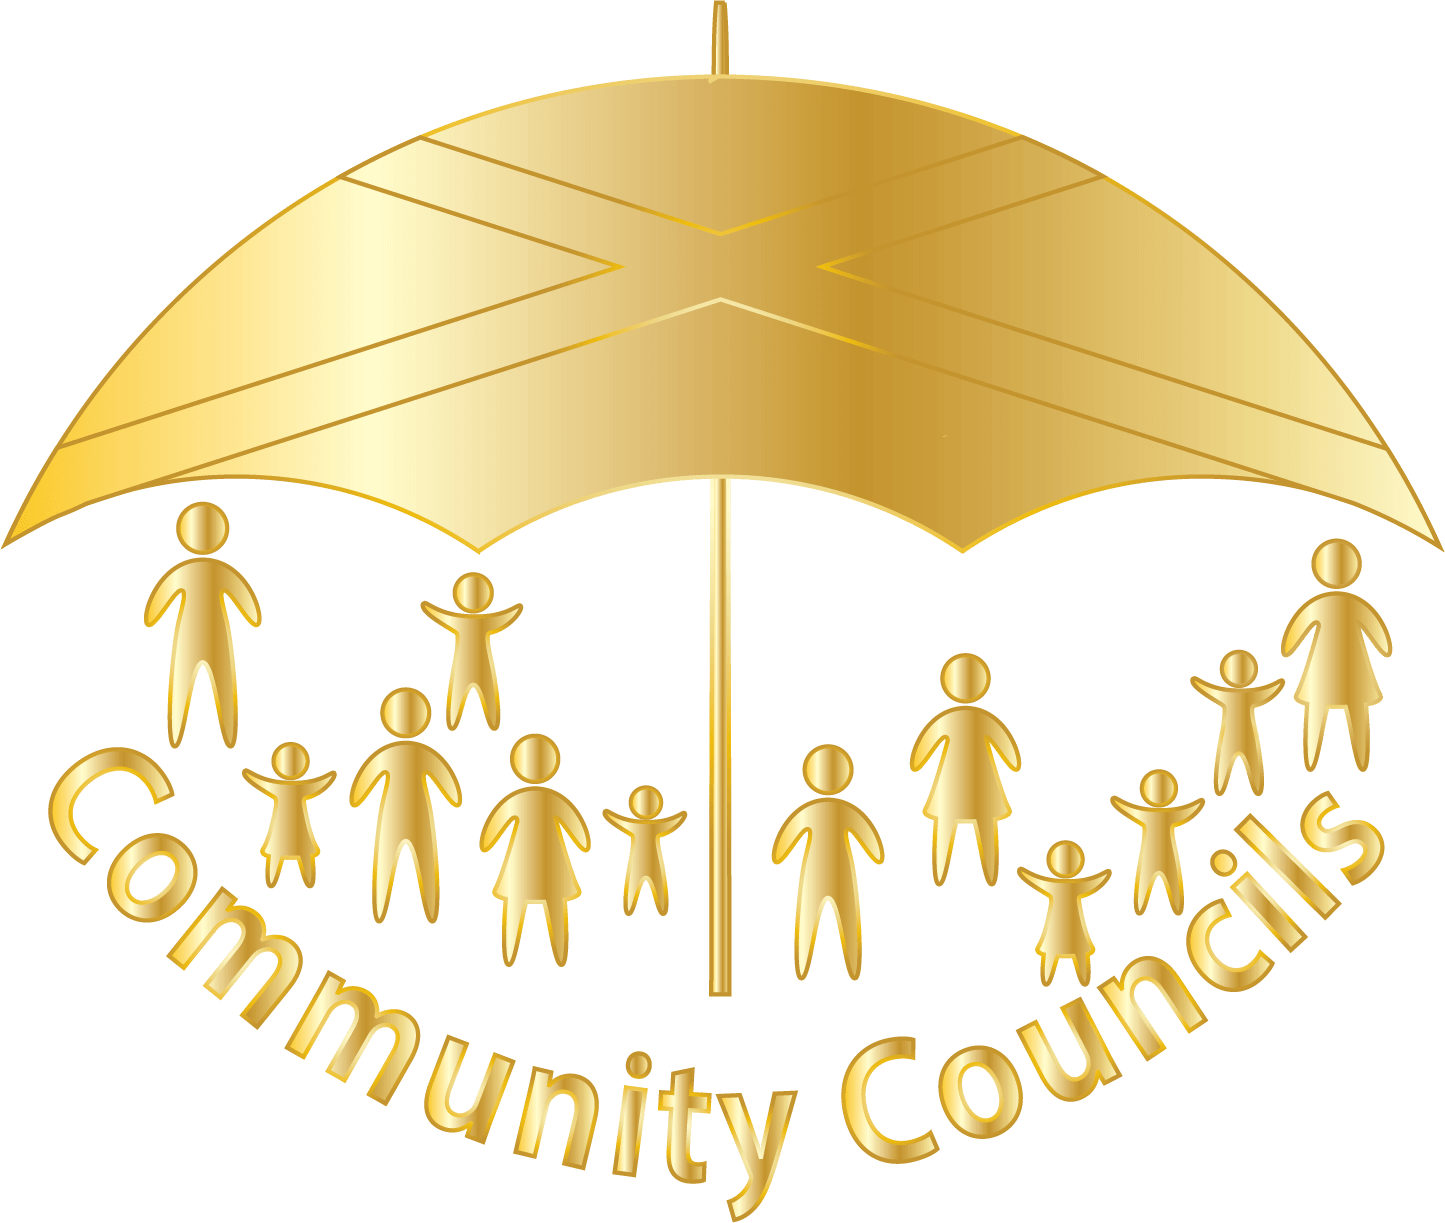 Community Councils 50th anniversary